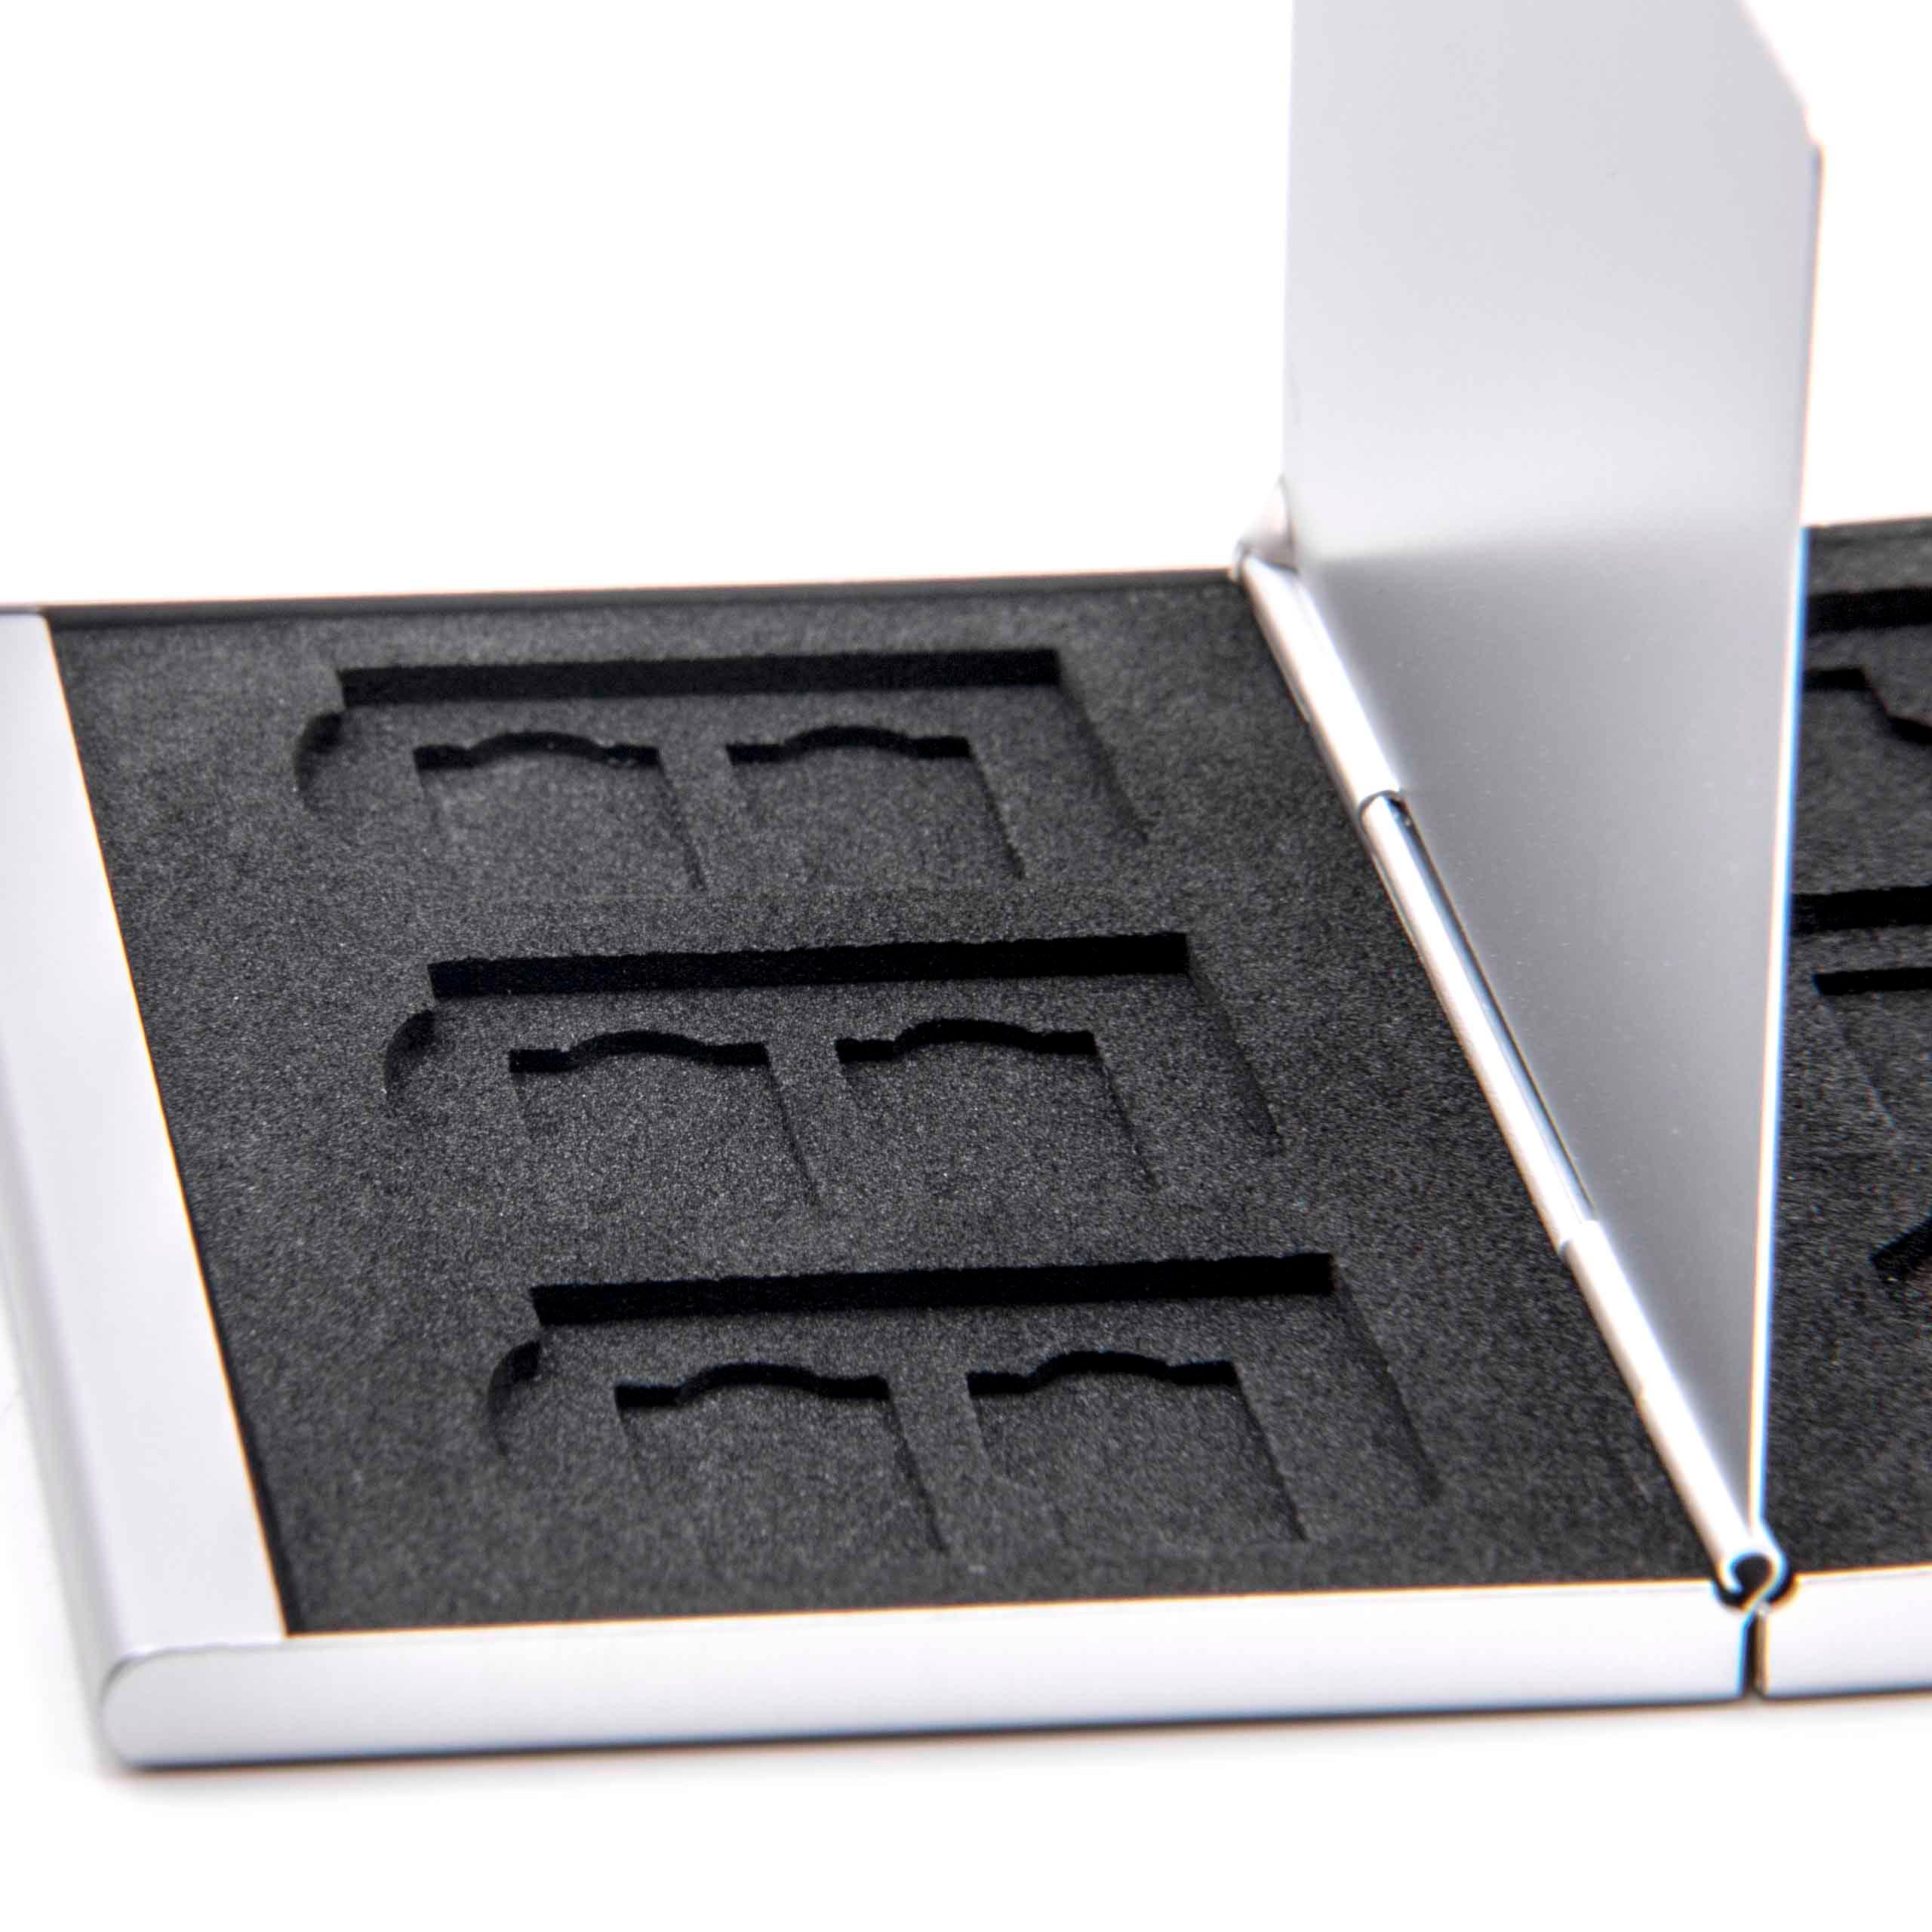 Etui passend für Speicherkarten 12x MicroSD - Case, Aluminium, silber